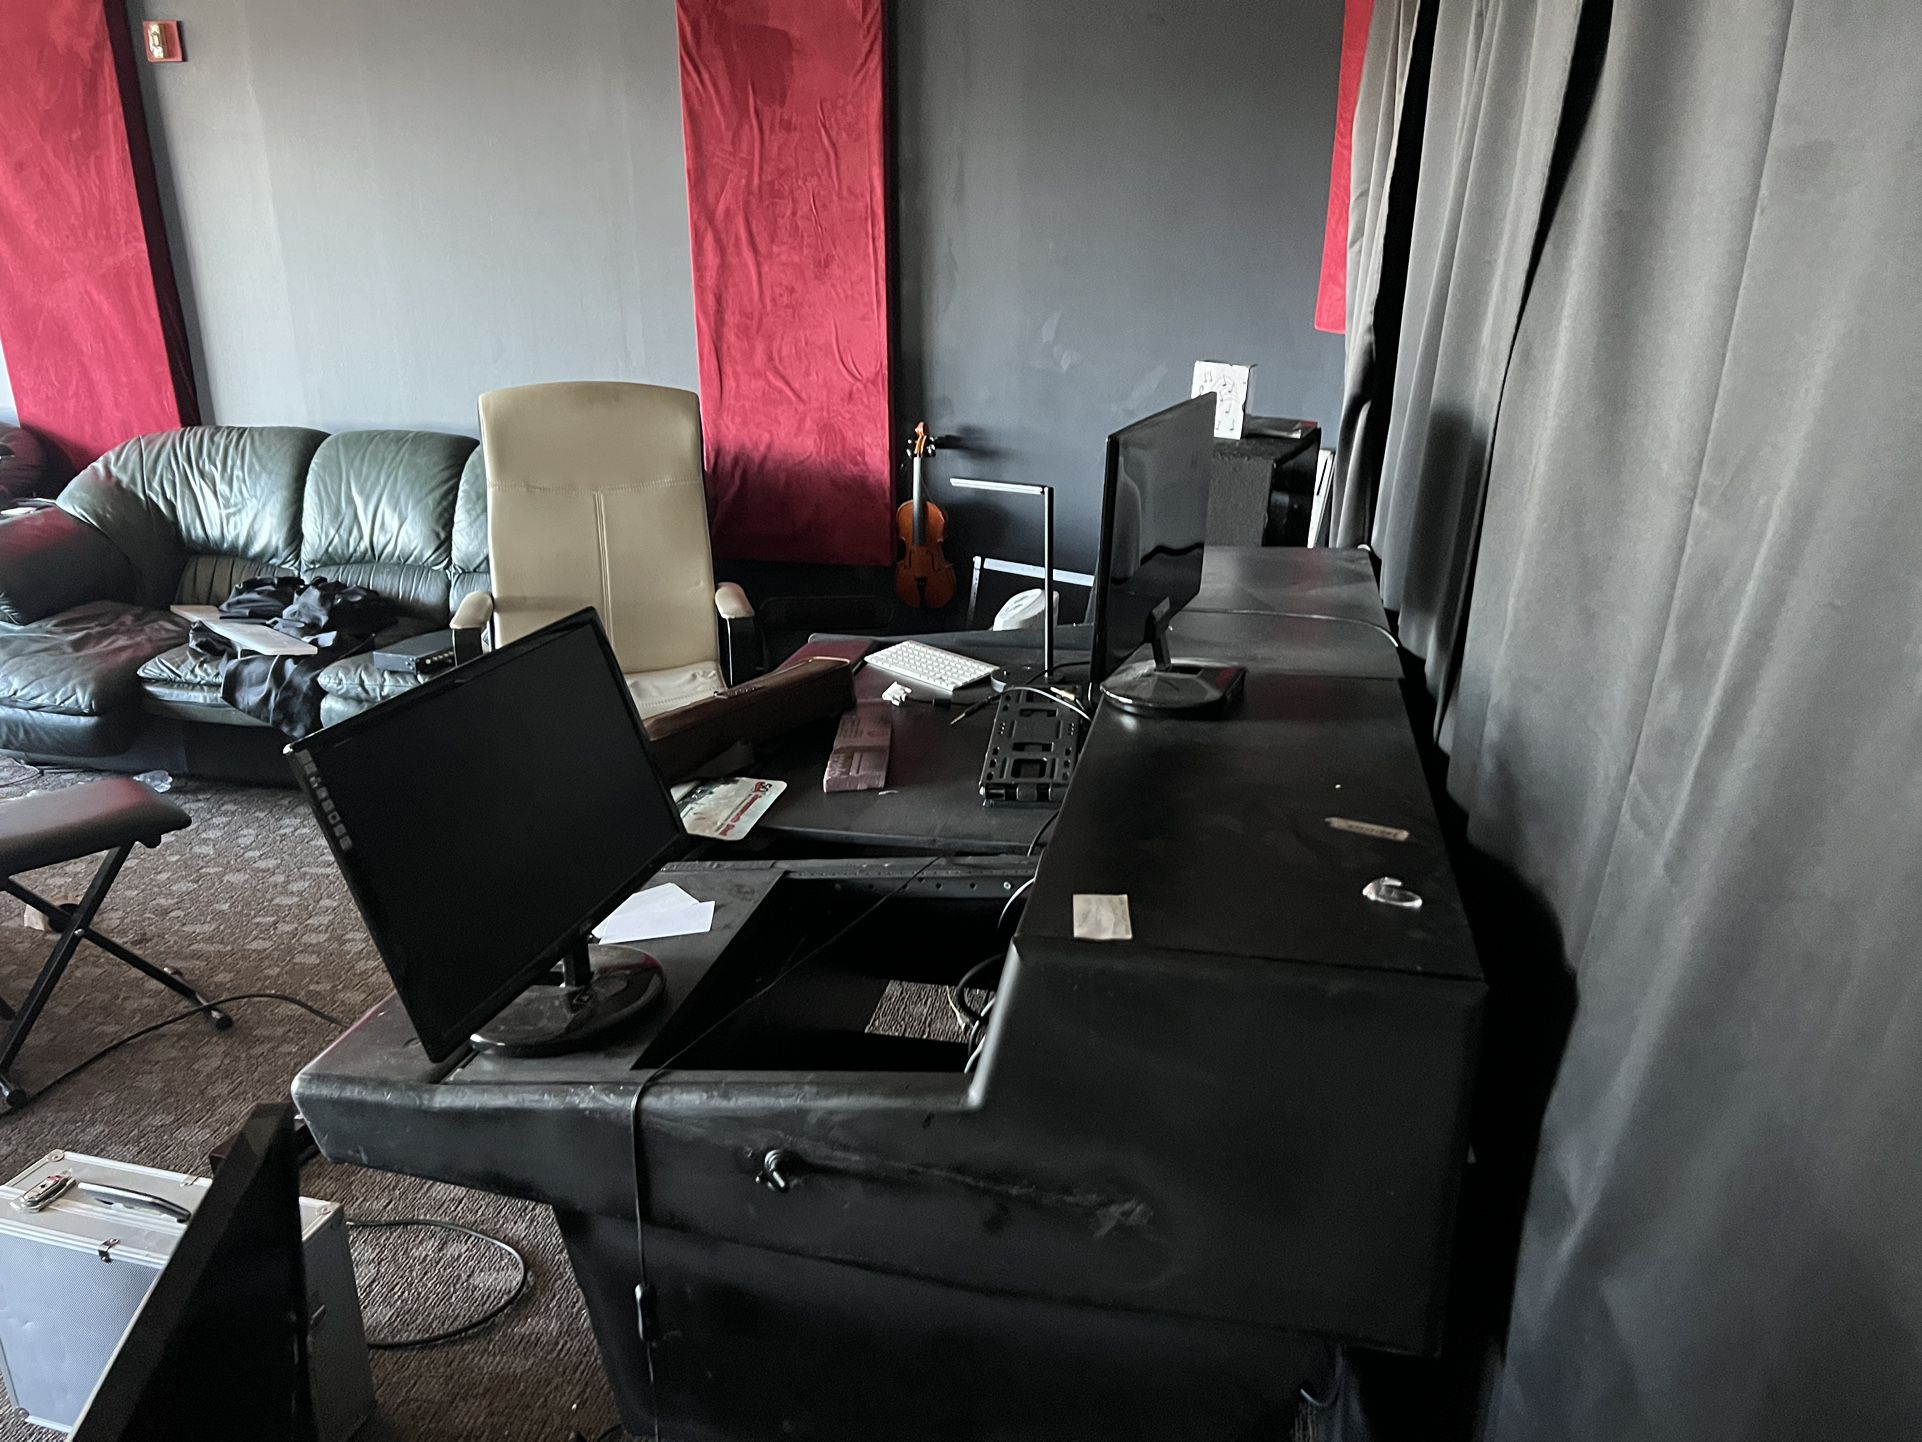  Recording Studio Mixing Board Station